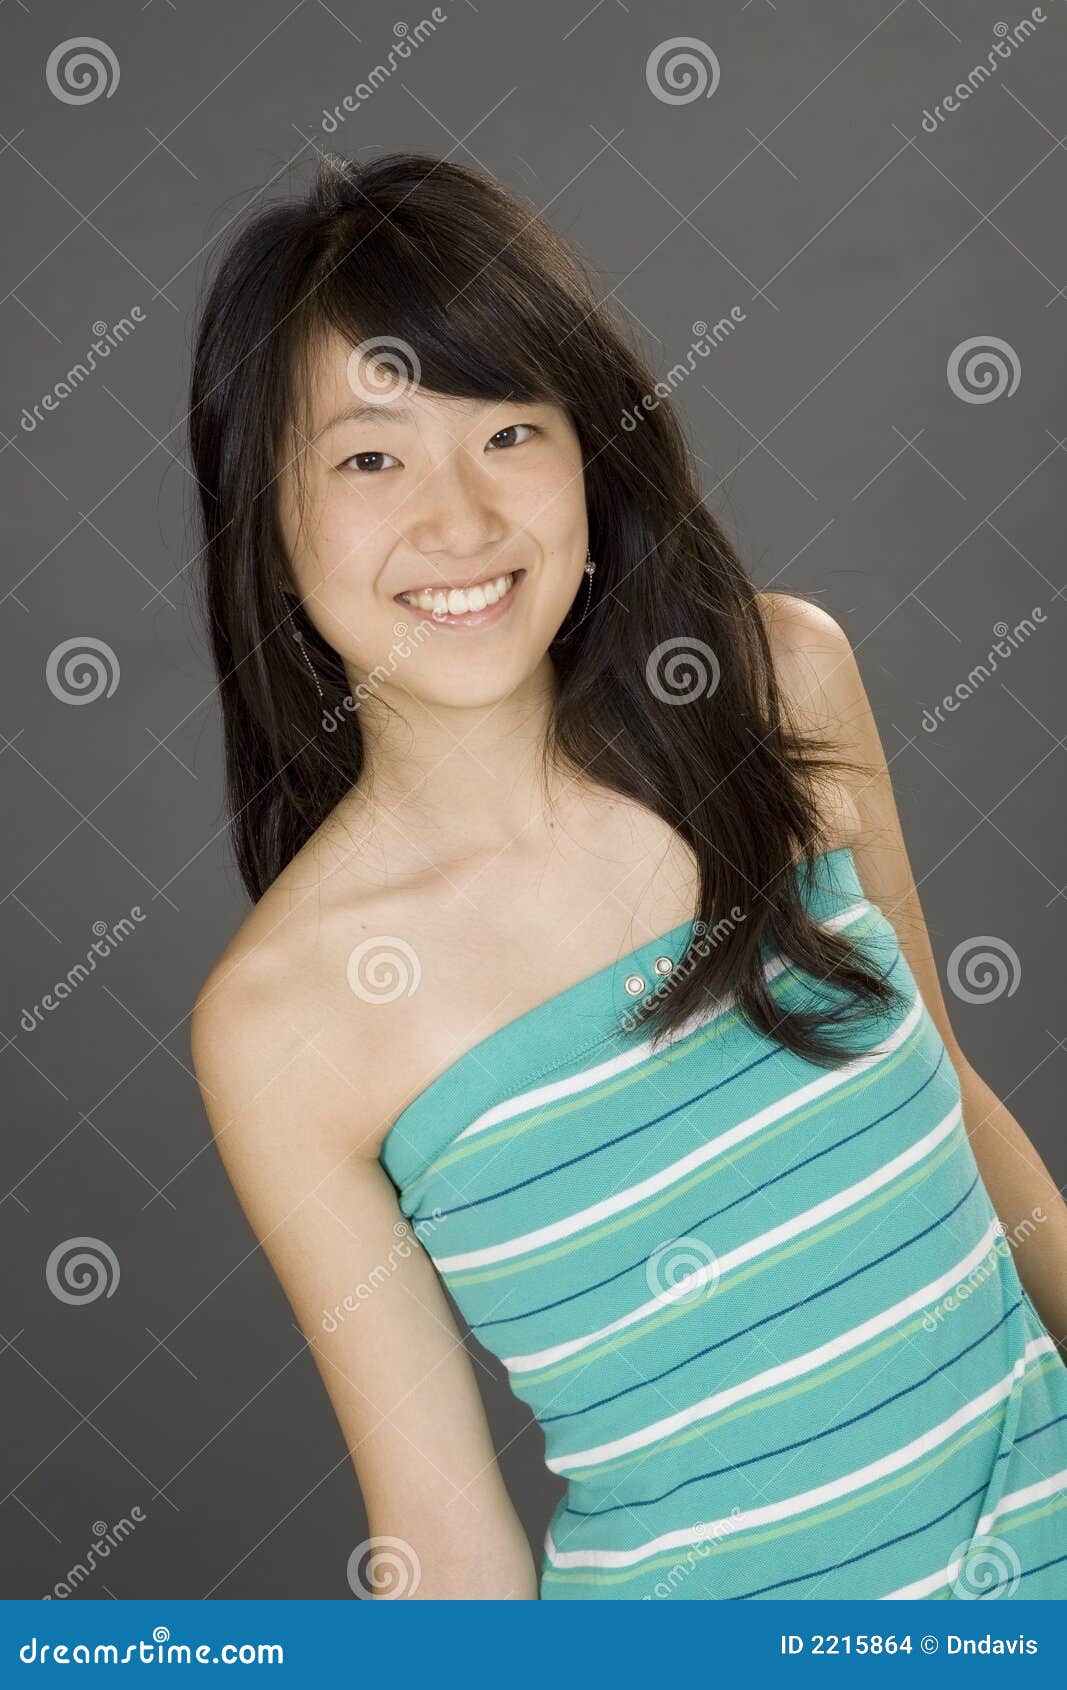 amateur asian teen girl Fucking Pics Hq